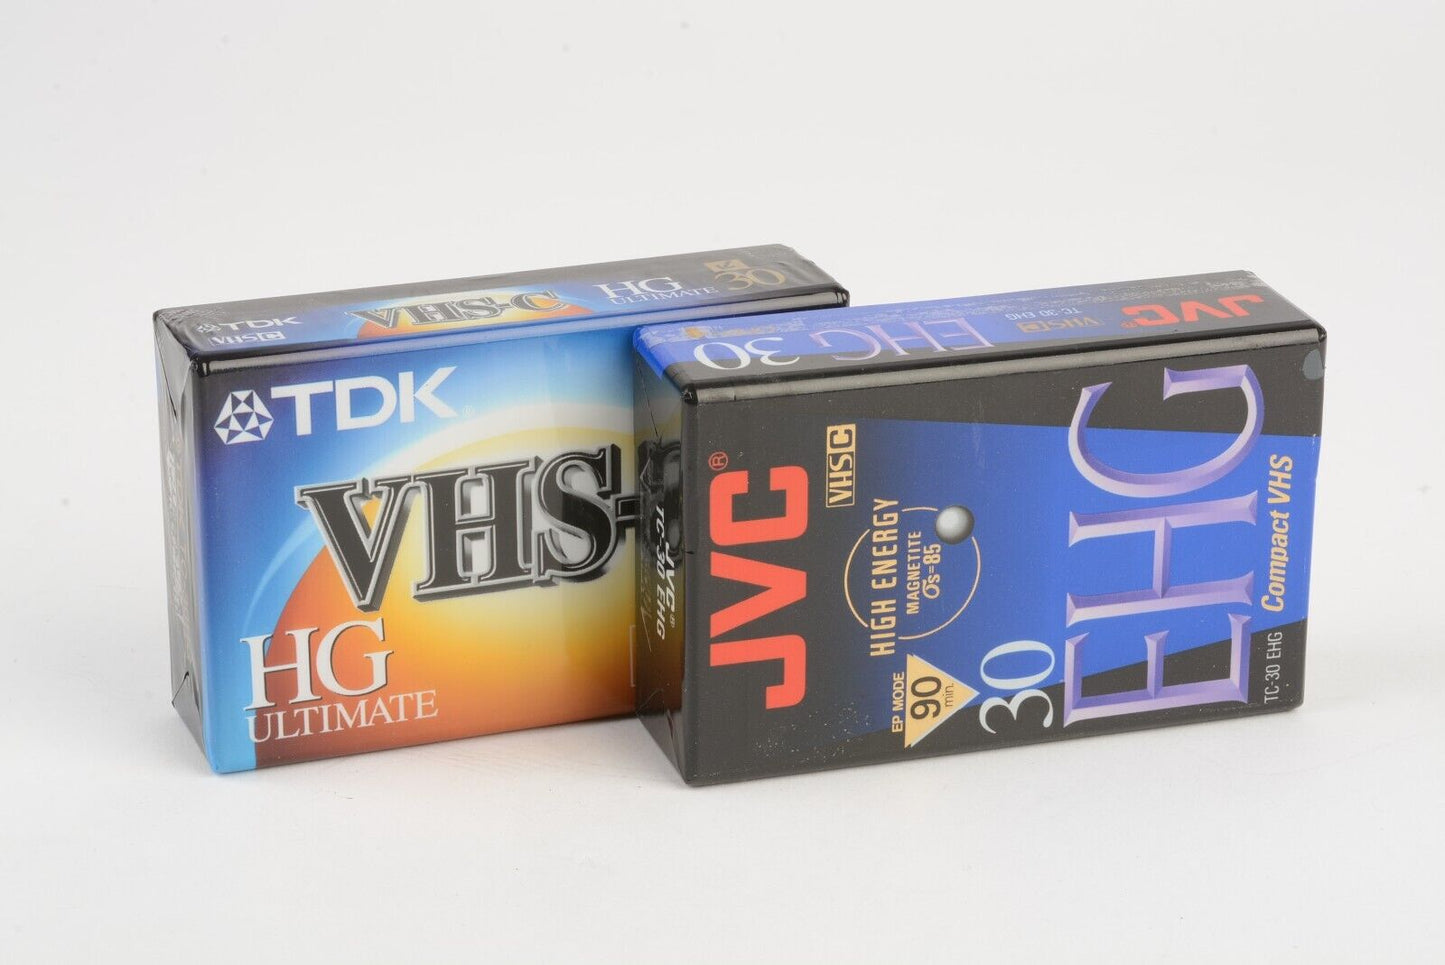 2X NEW SEALED JVC & TDK EHG & HG 30 VHS-C 30 MINUTE CASSETTES SEALED